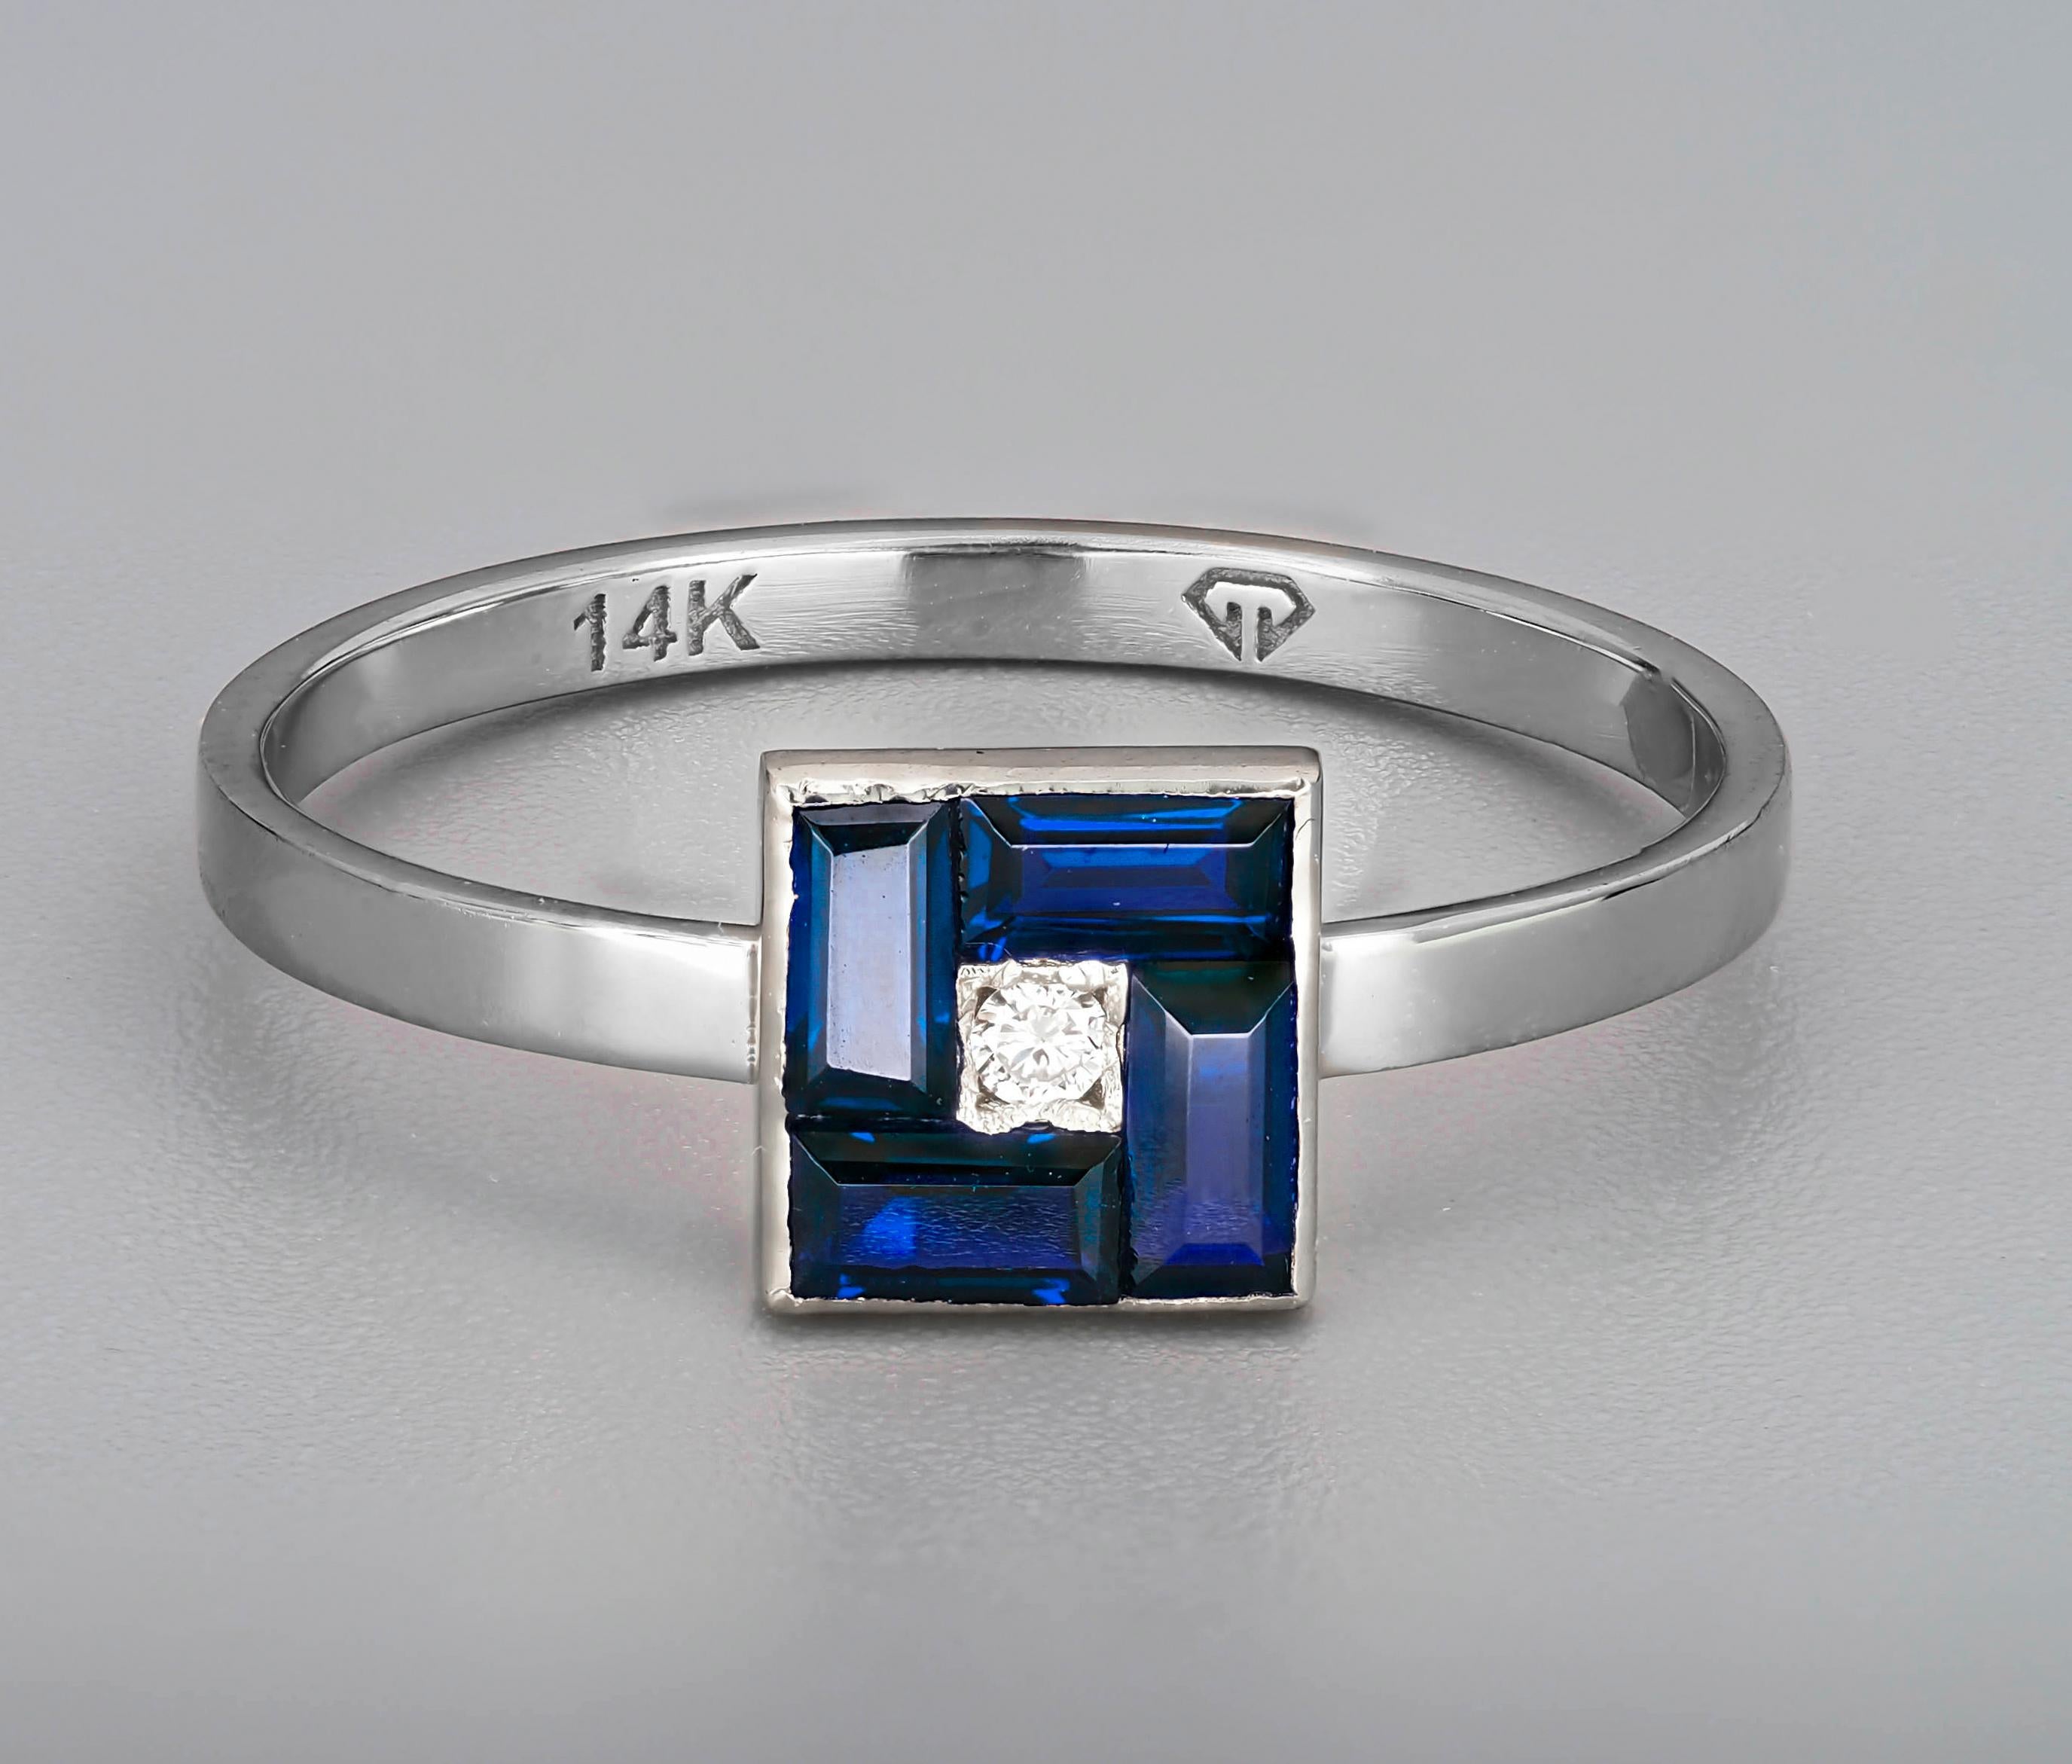 Blue baguette 14k gold ring.
Baguette lab sapphire 14k gold ring. Delicate sapphire ring. Blue gem ring. September birthstone ring. Minimalist gold ring. Square gold ring.

Gemstones:
1.Lab sapphire: blue color, baguette cut (4 pieces x 0.15